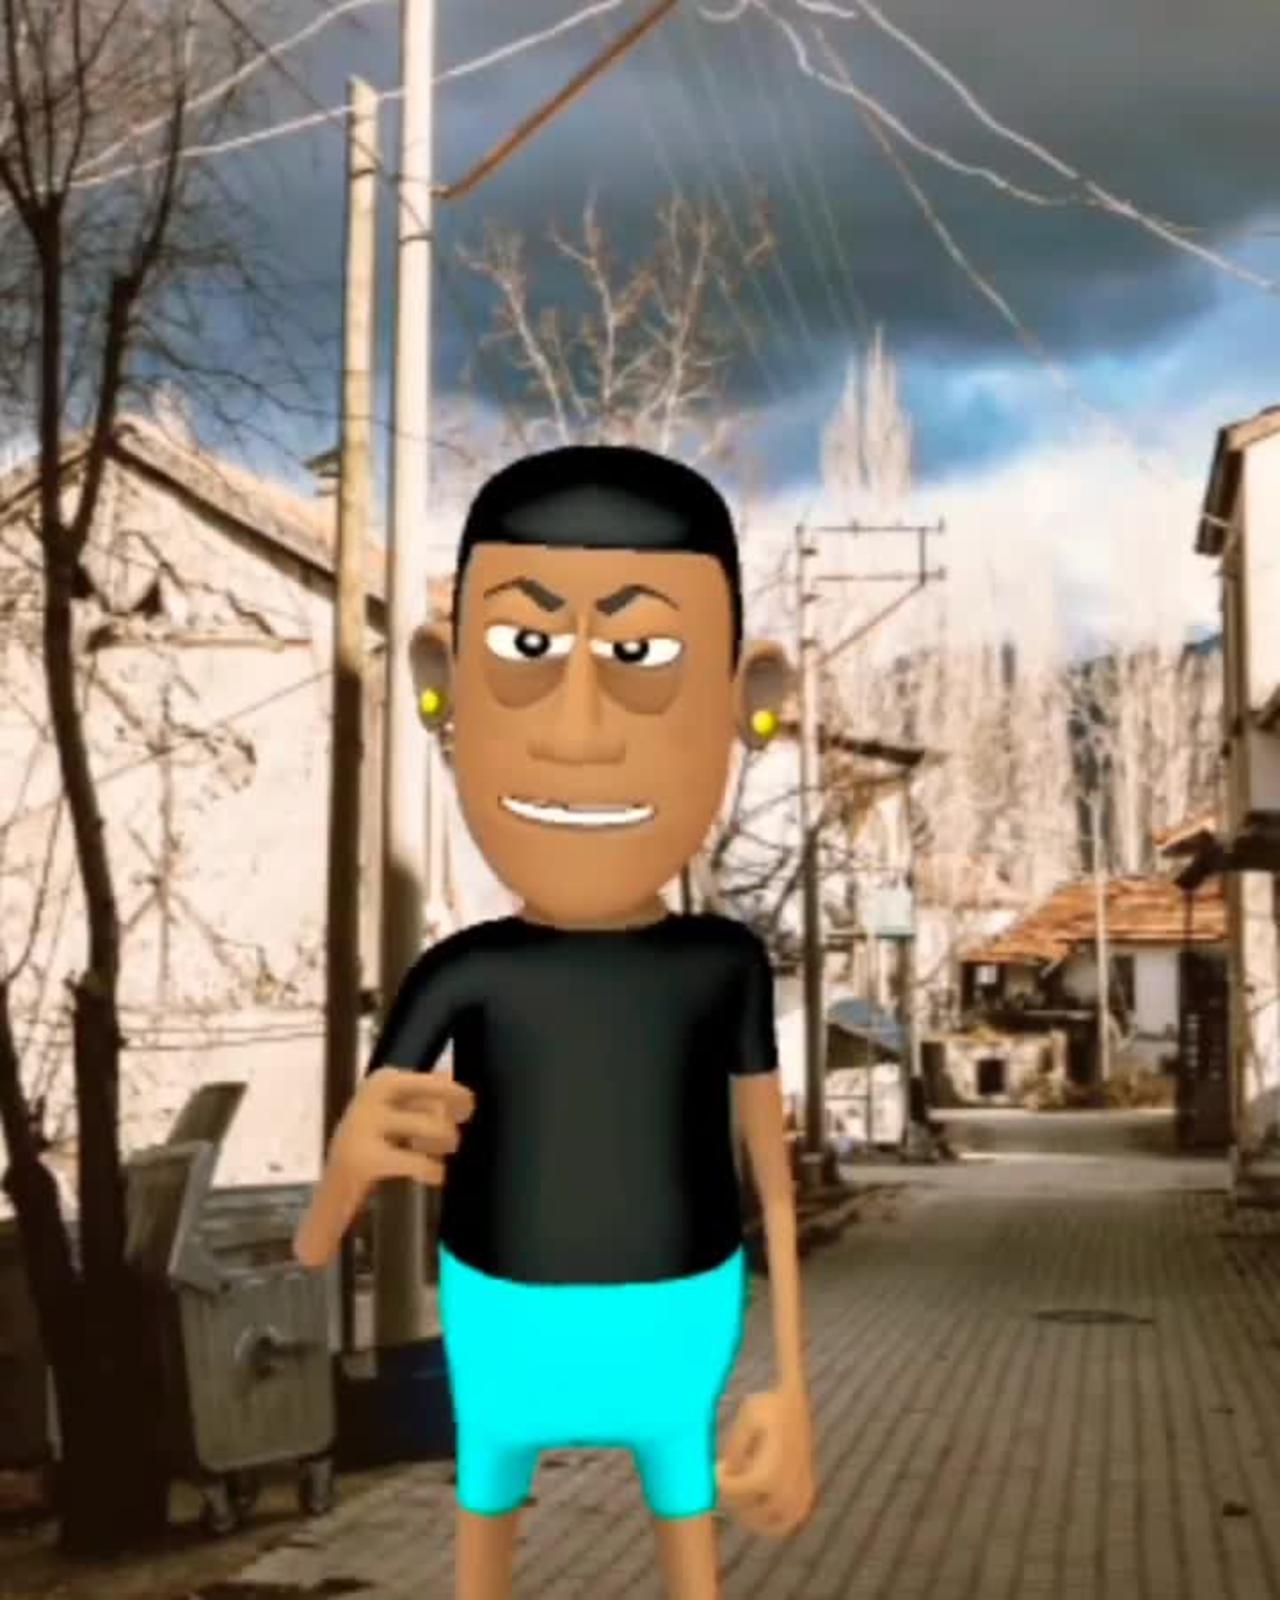 Funny Cartoon Animation About Meek Mill, Travis Scott & Kylie Jenner 😆